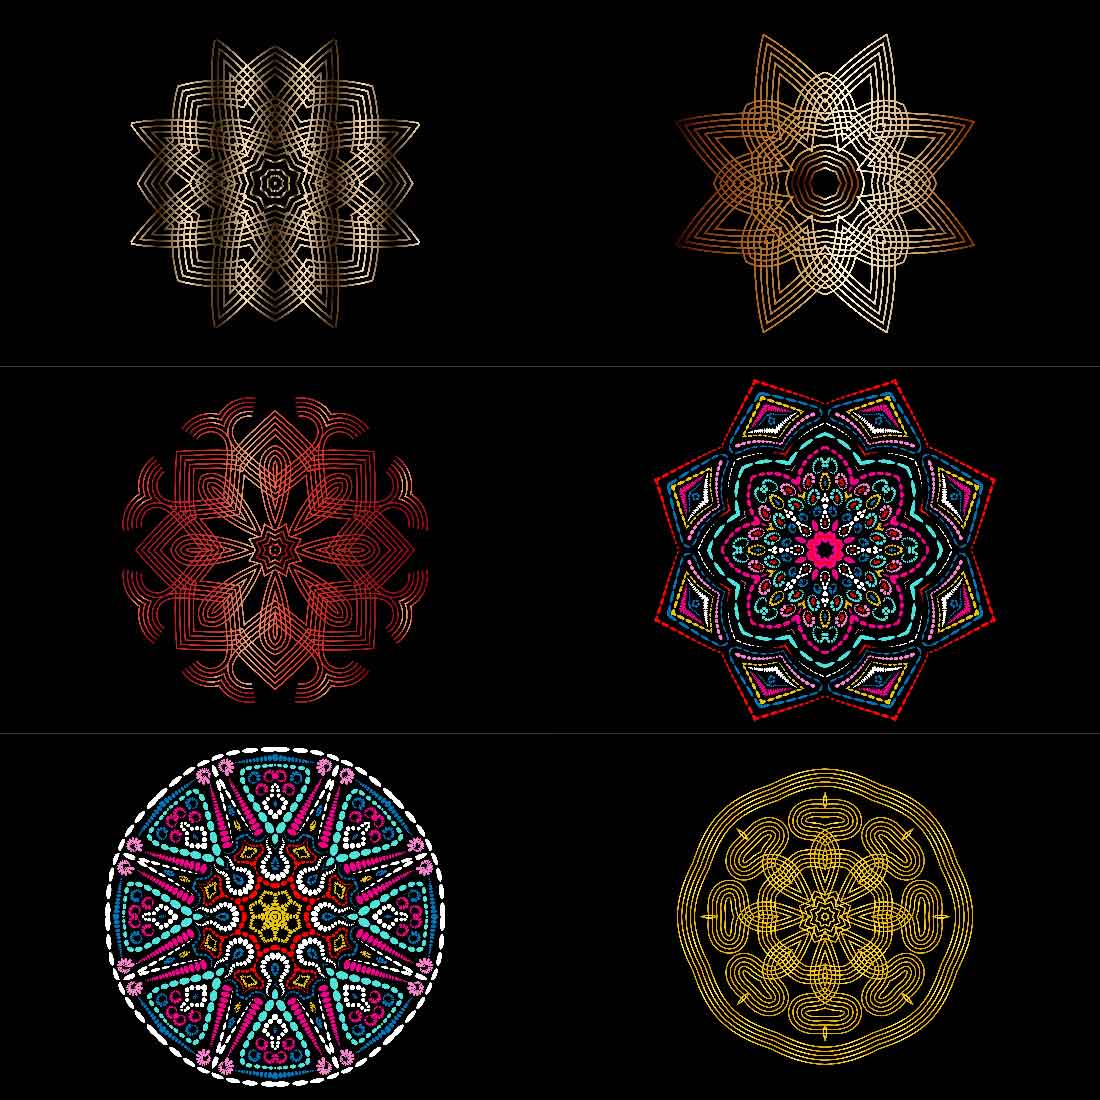 A selection of unique images of geometric mandalas